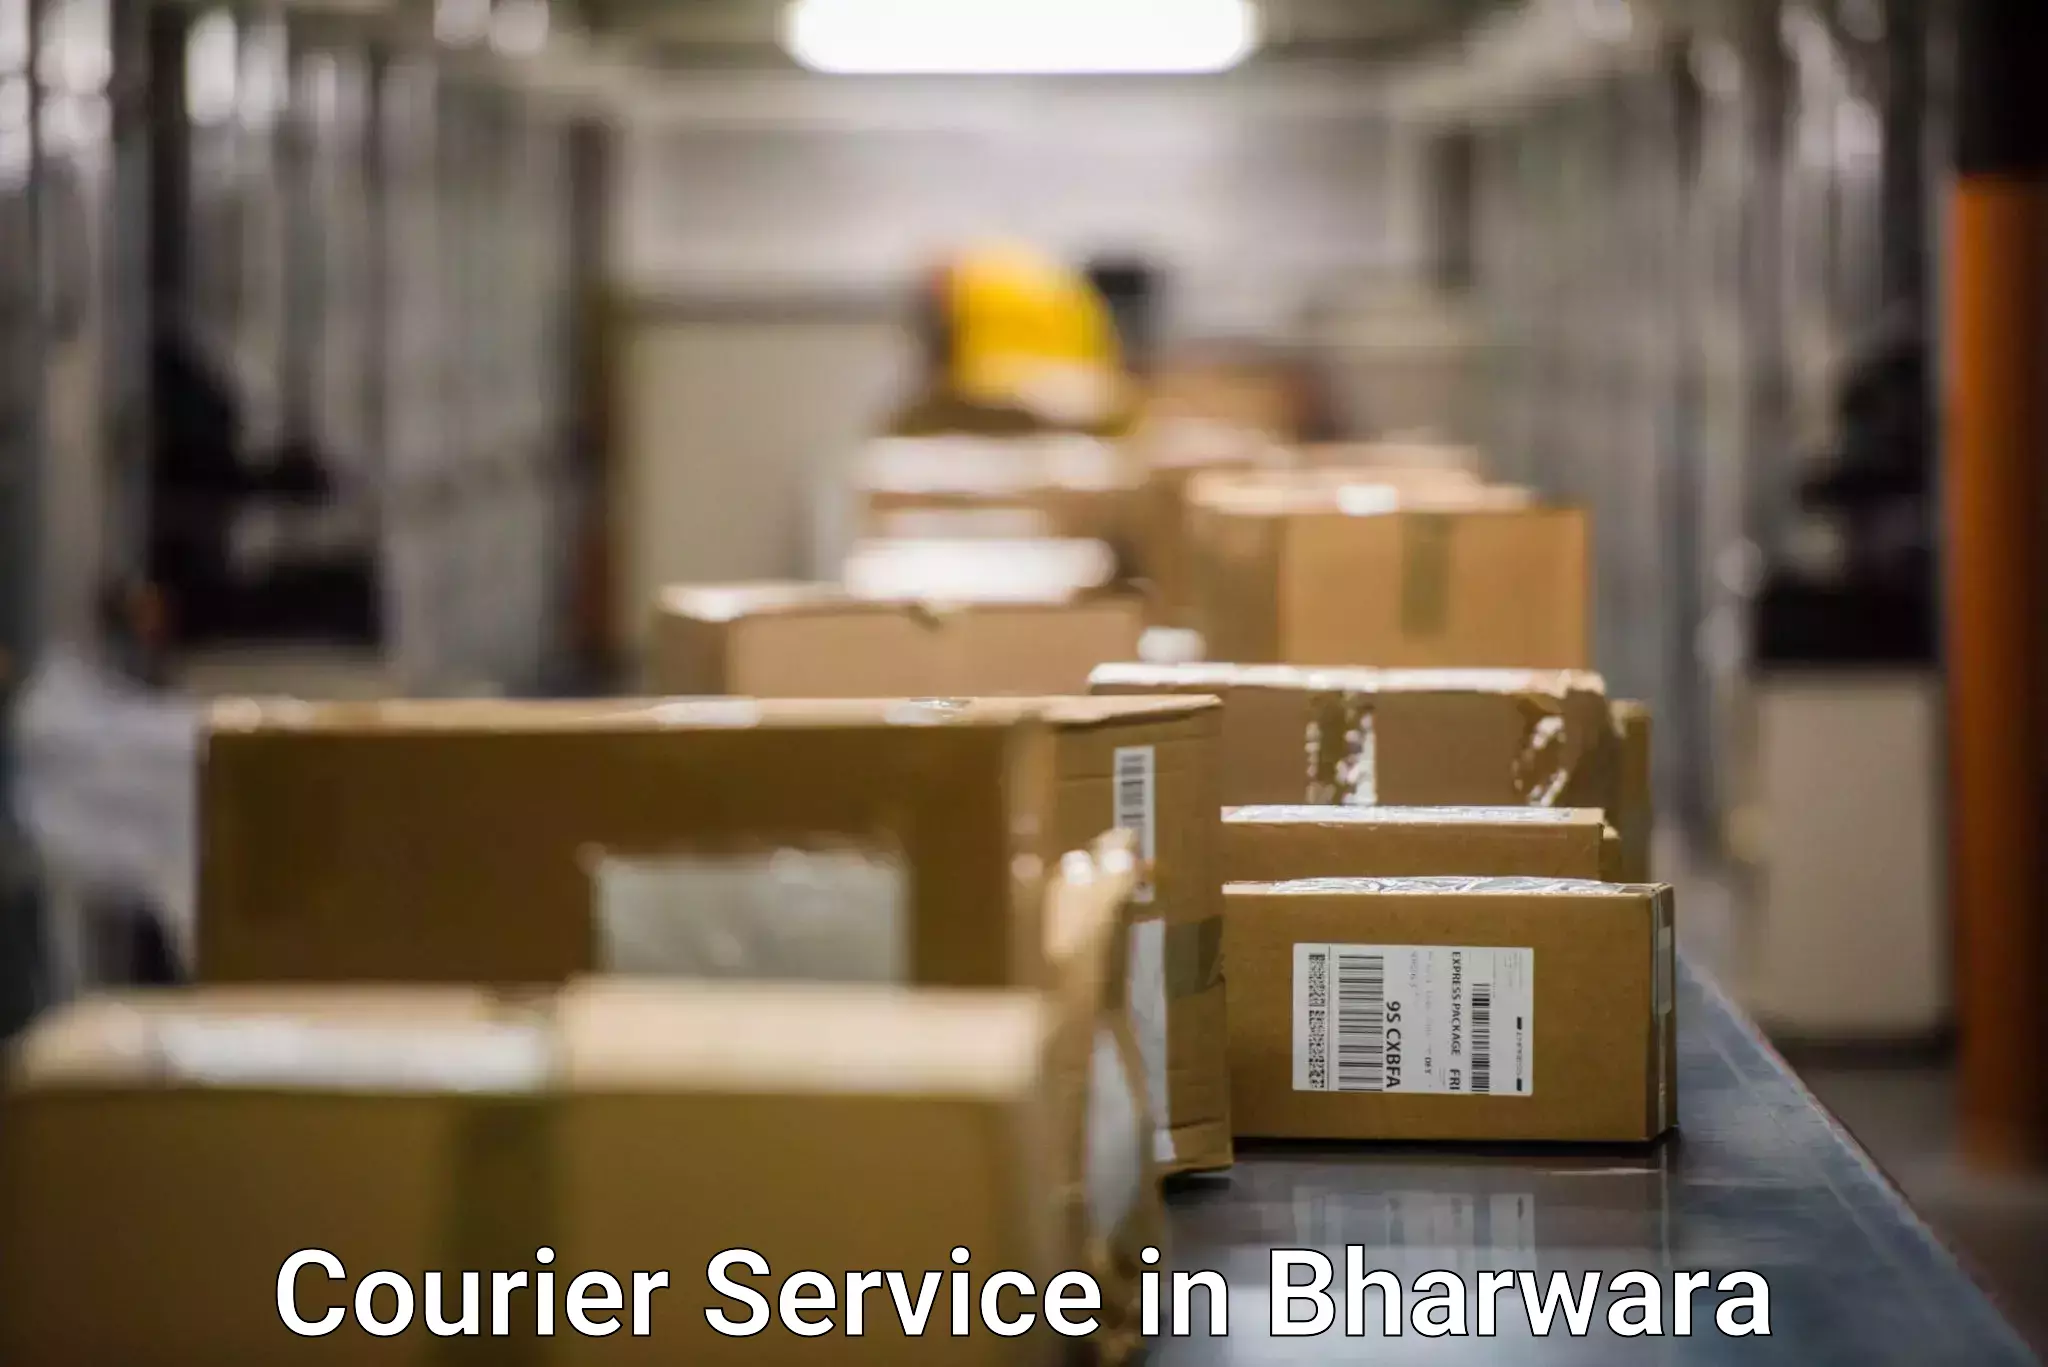 Courier service efficiency in Bharwara